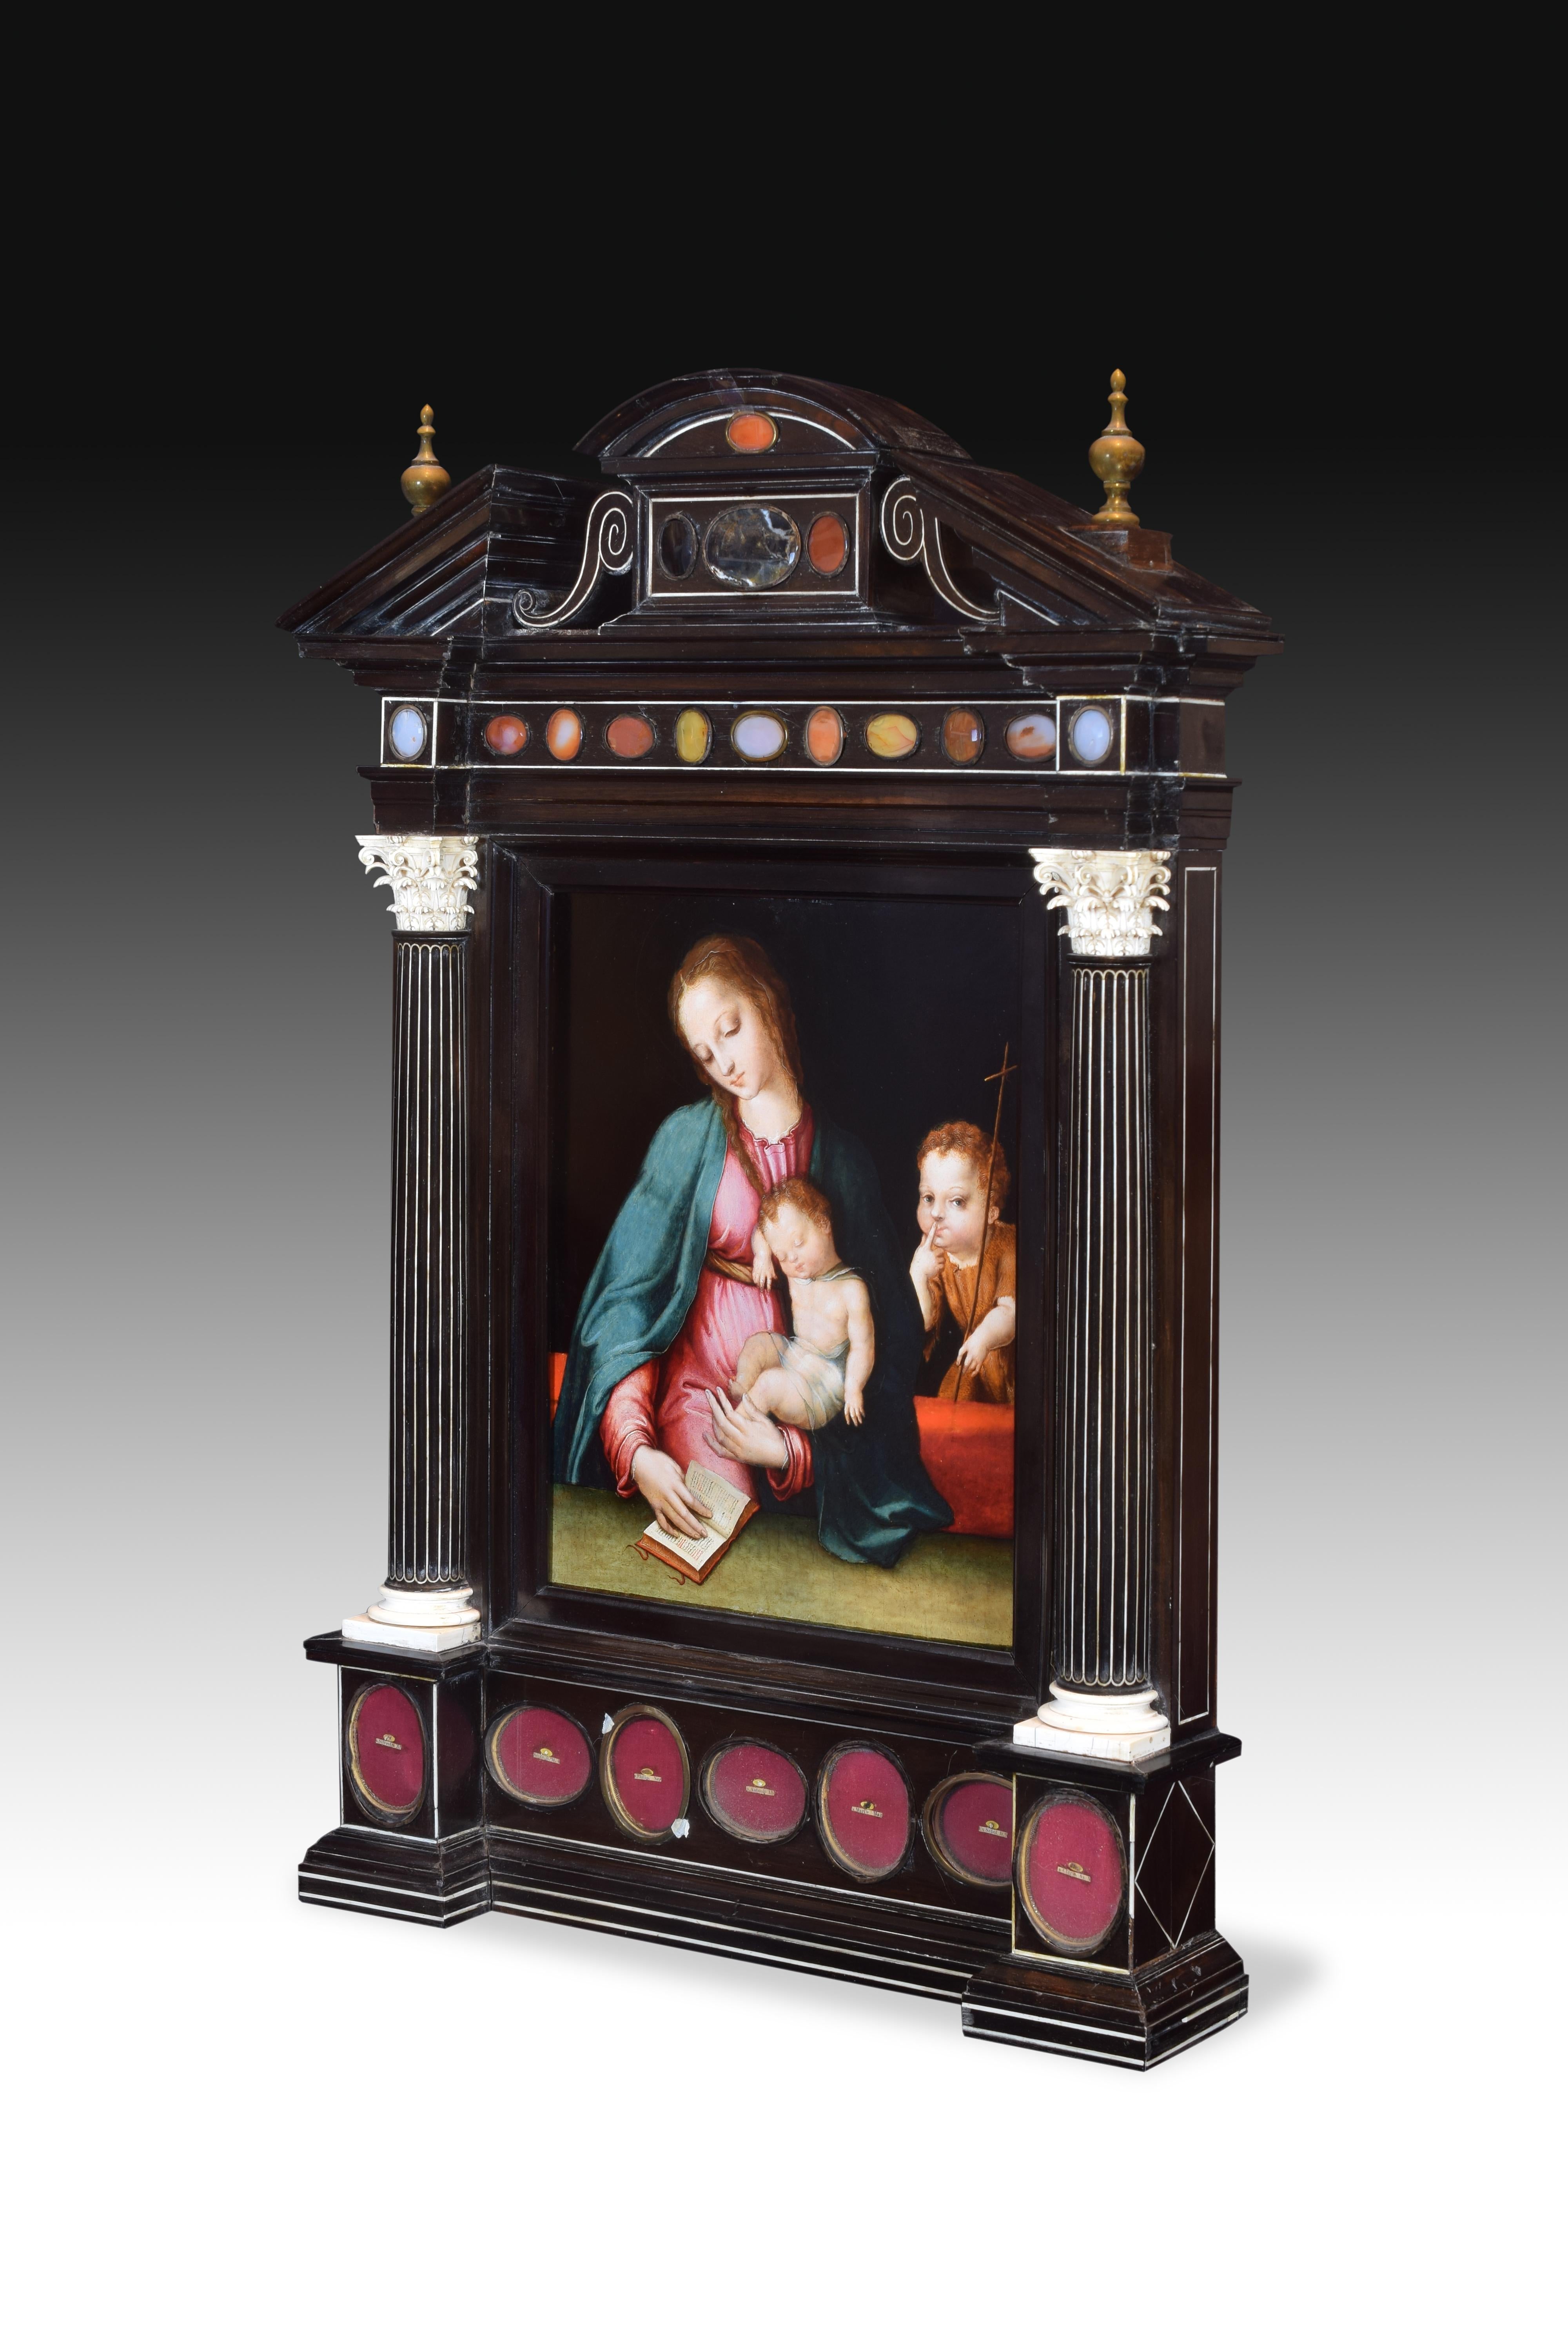 Renaissance Altarpiece Reliquary with Oil on Table, Rosewood, Luis De Morales, 16th Century